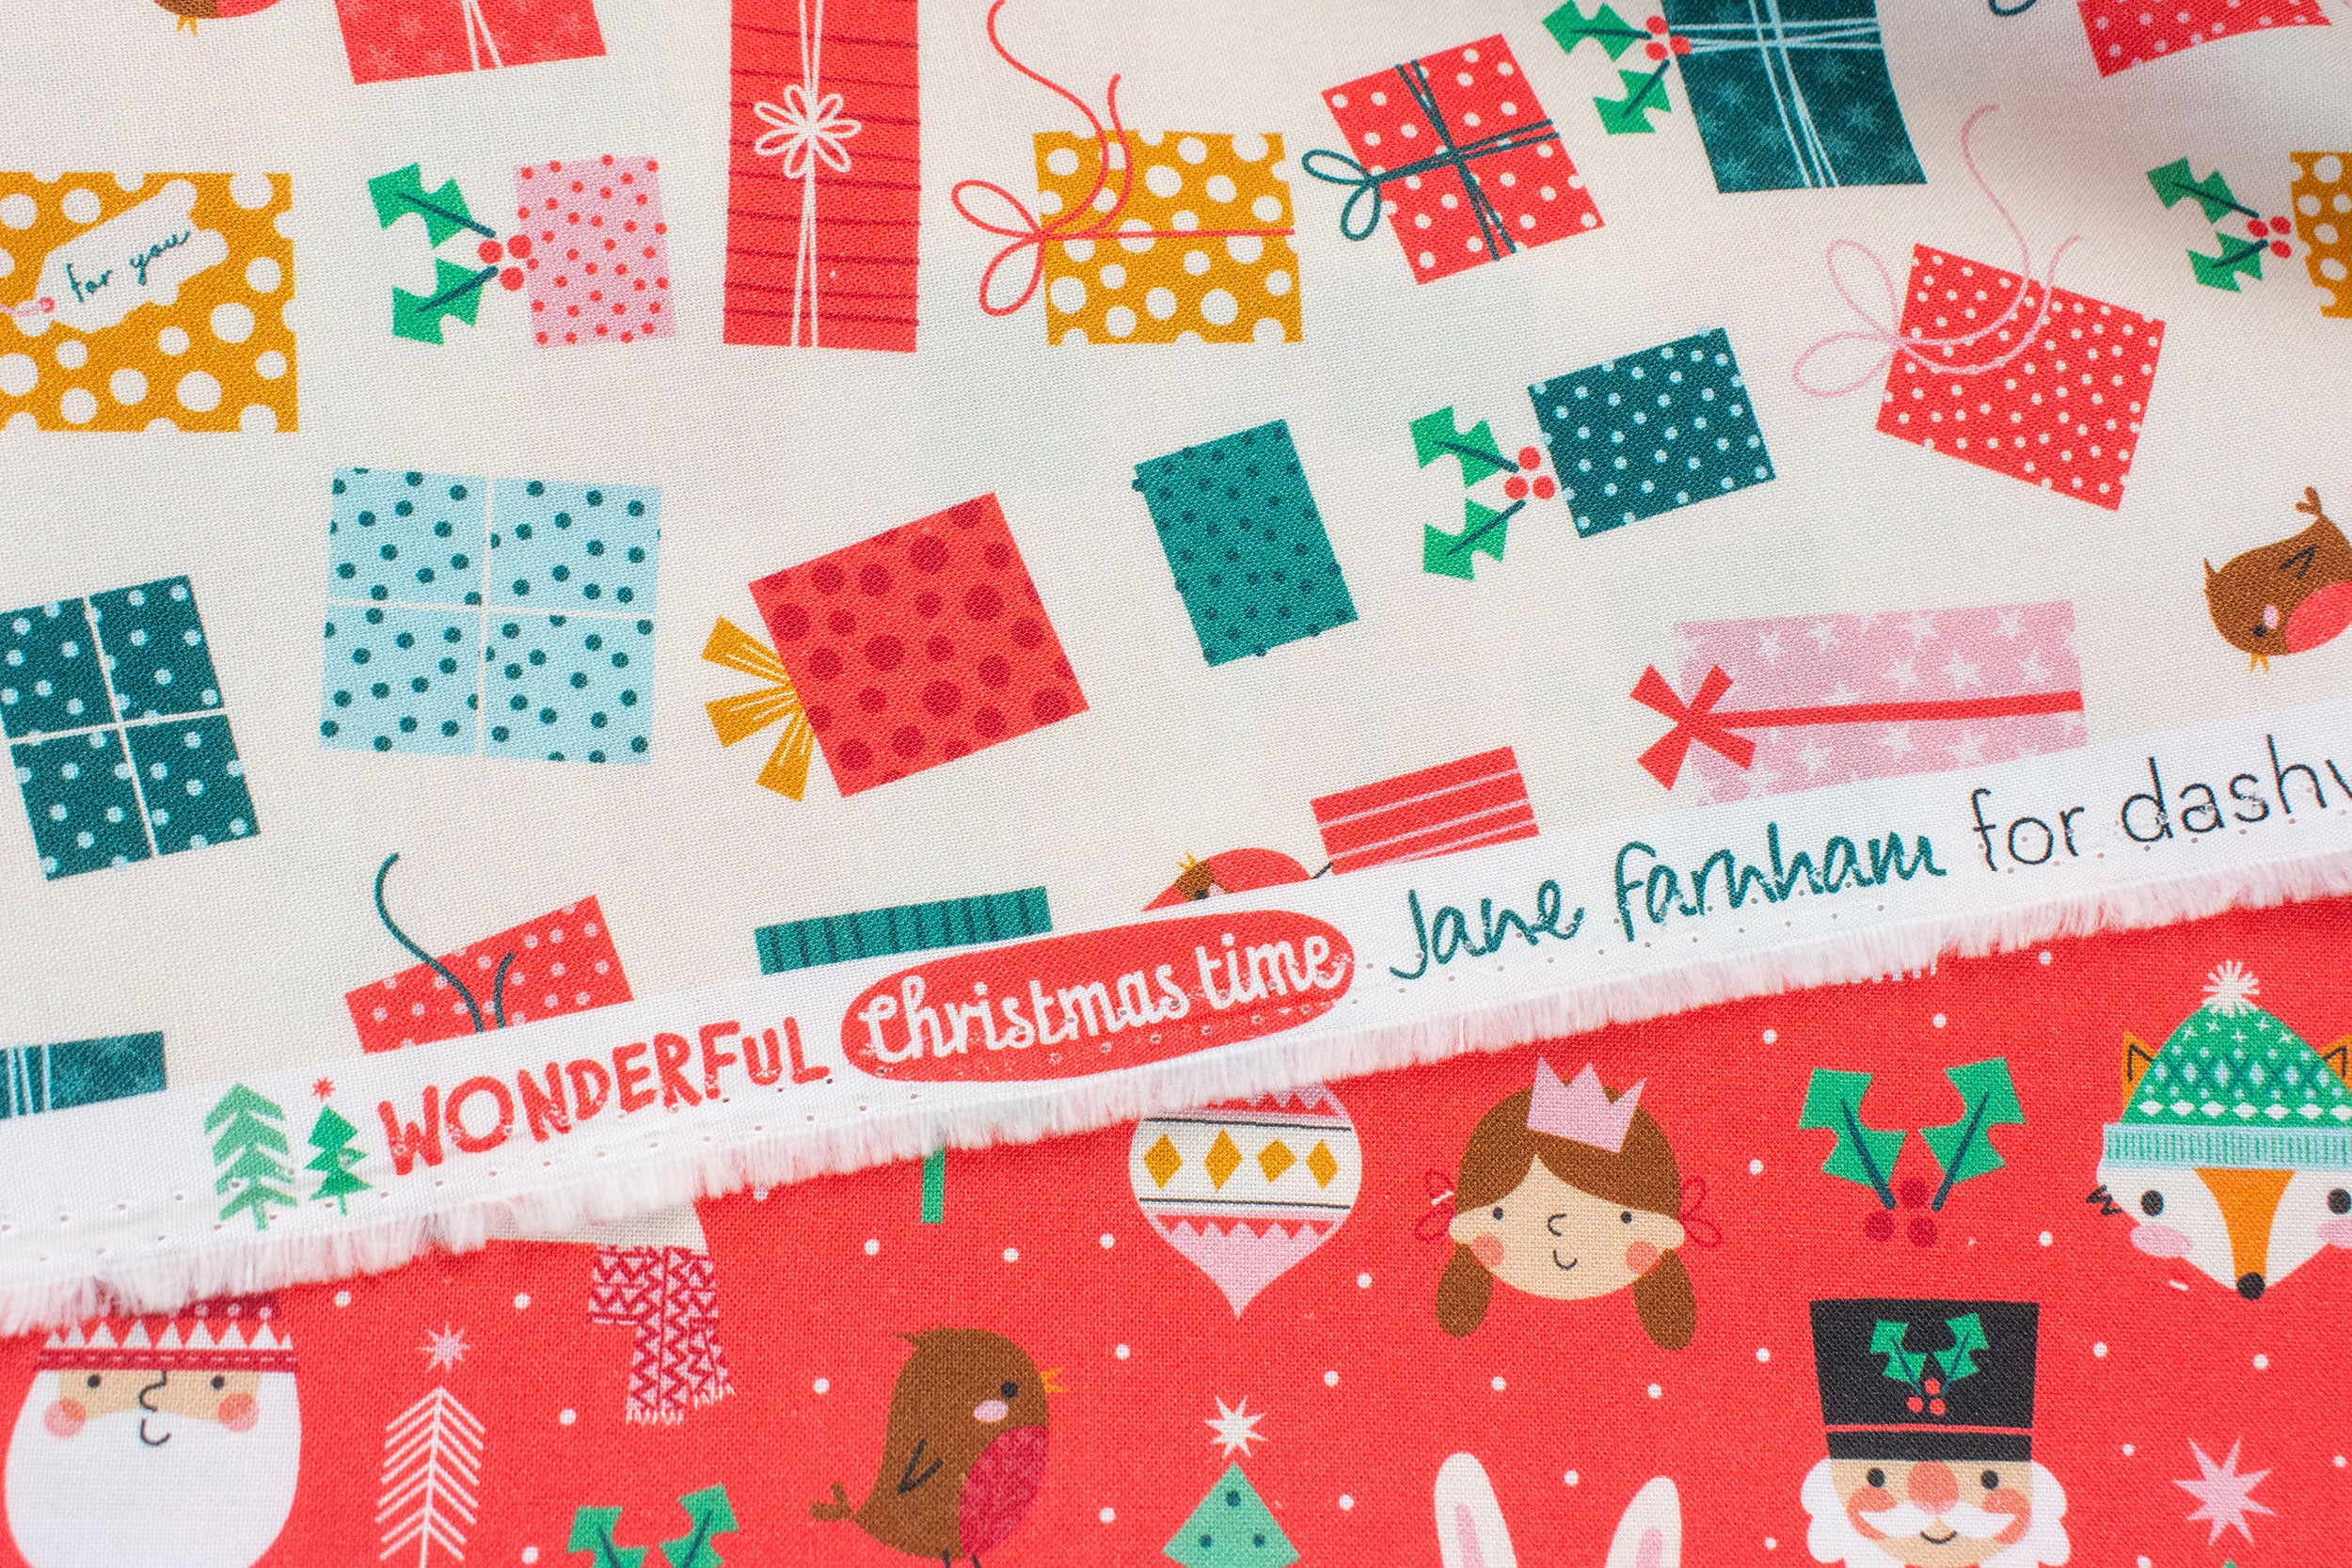 Wonderful Christmas Time | WOND2511 by Jane Farnham for Dashwood Studio